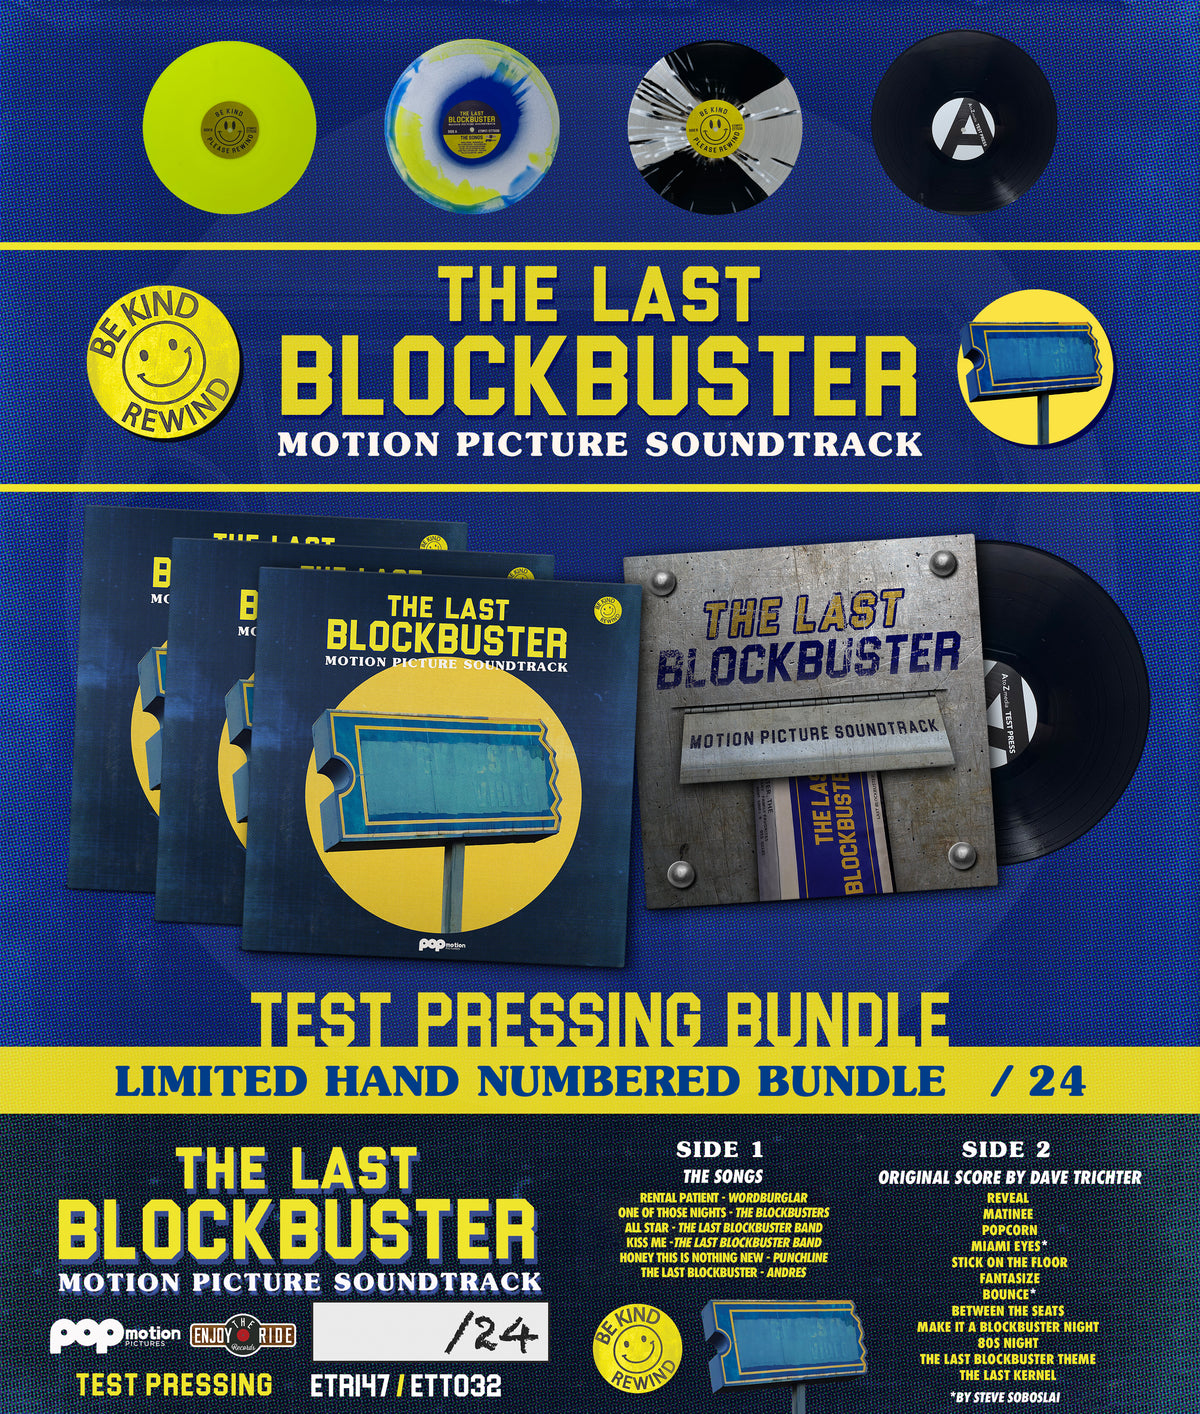 The Last Blockbuster Motion Picture Soundtrack (ETR147/ETT032)